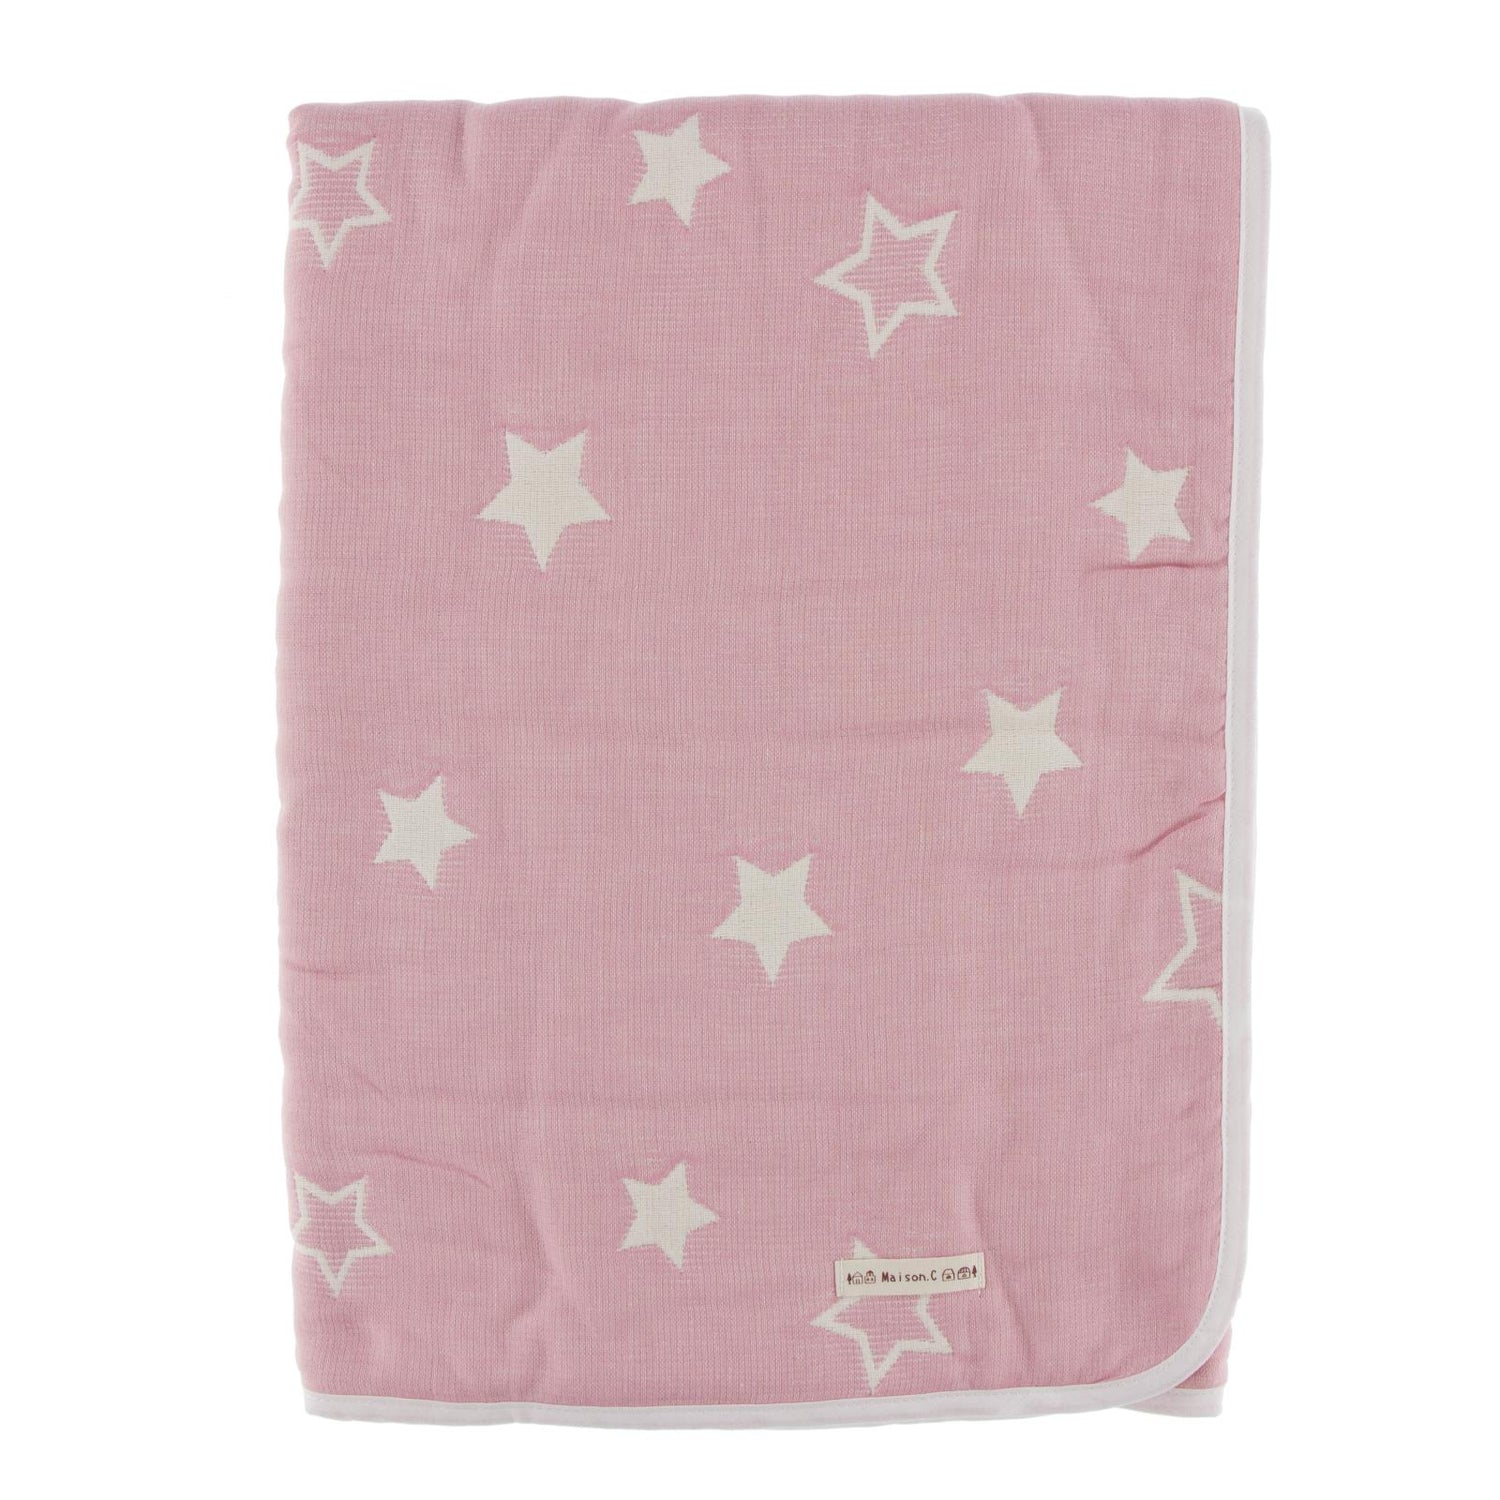 Jacquard Muslin Toddler/Kid Nap Blanket in Pink Star